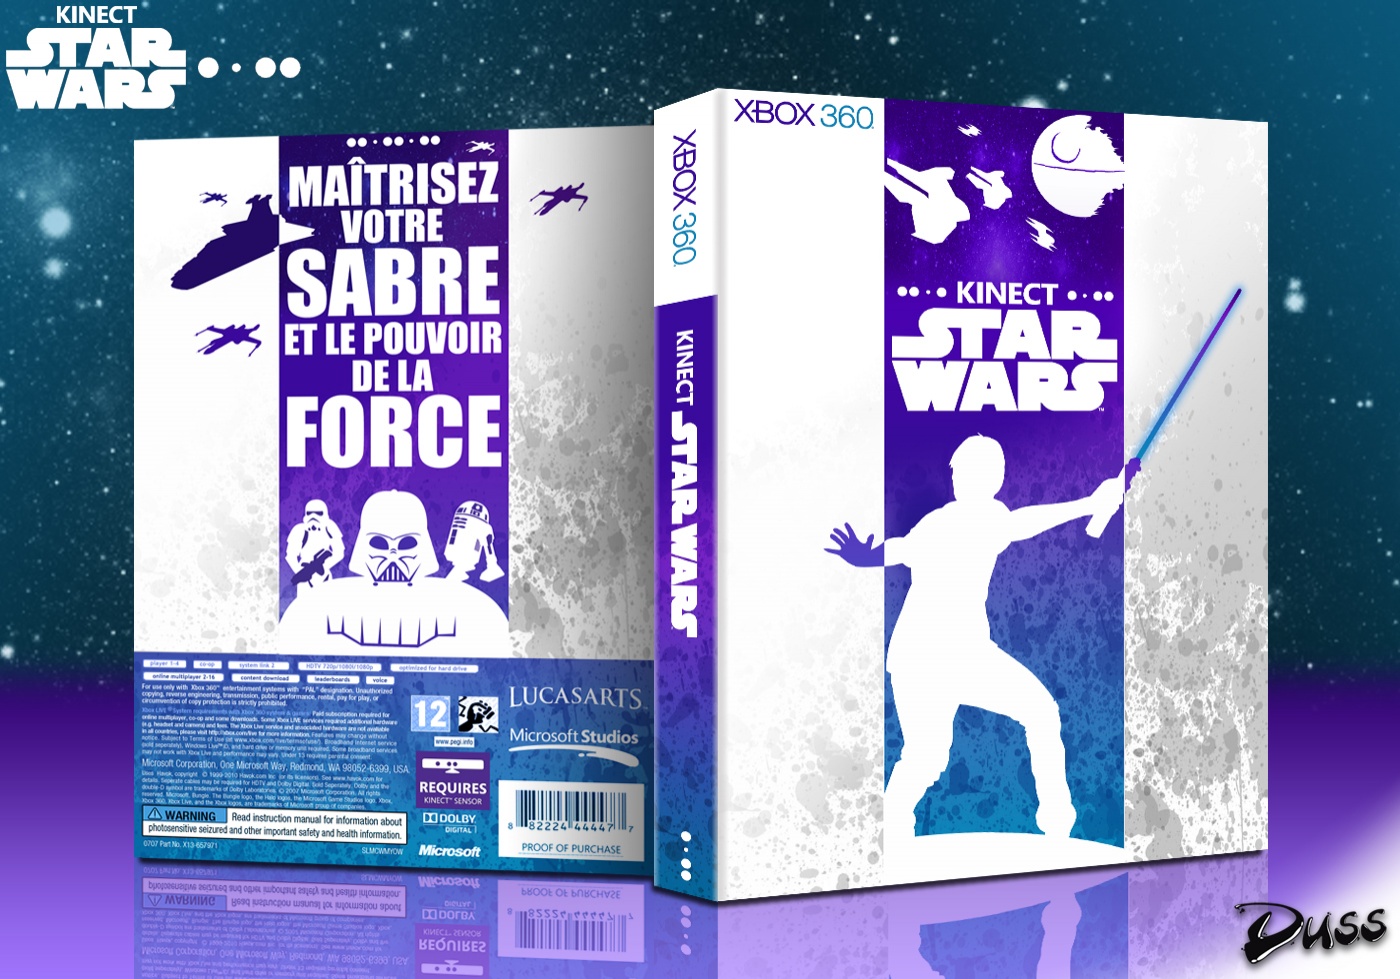 Kinect Star Wars box cover